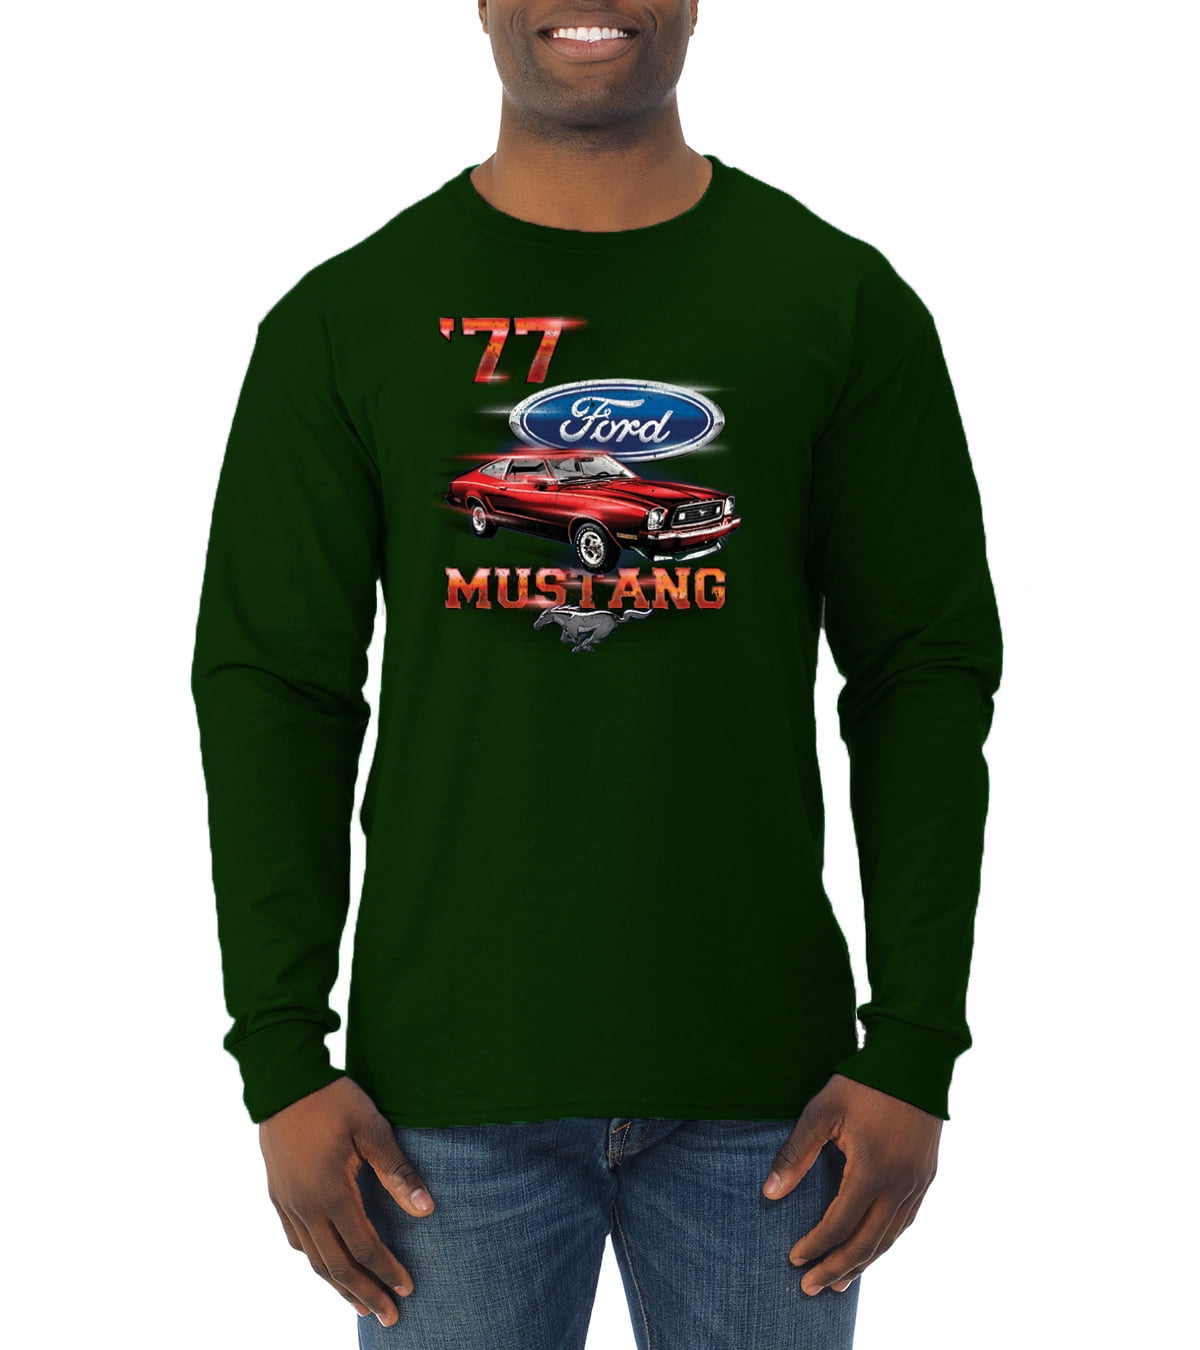 Buy Cool Shirts Ford T-shirt 1977 Mustang Long Sleeve Thermal 